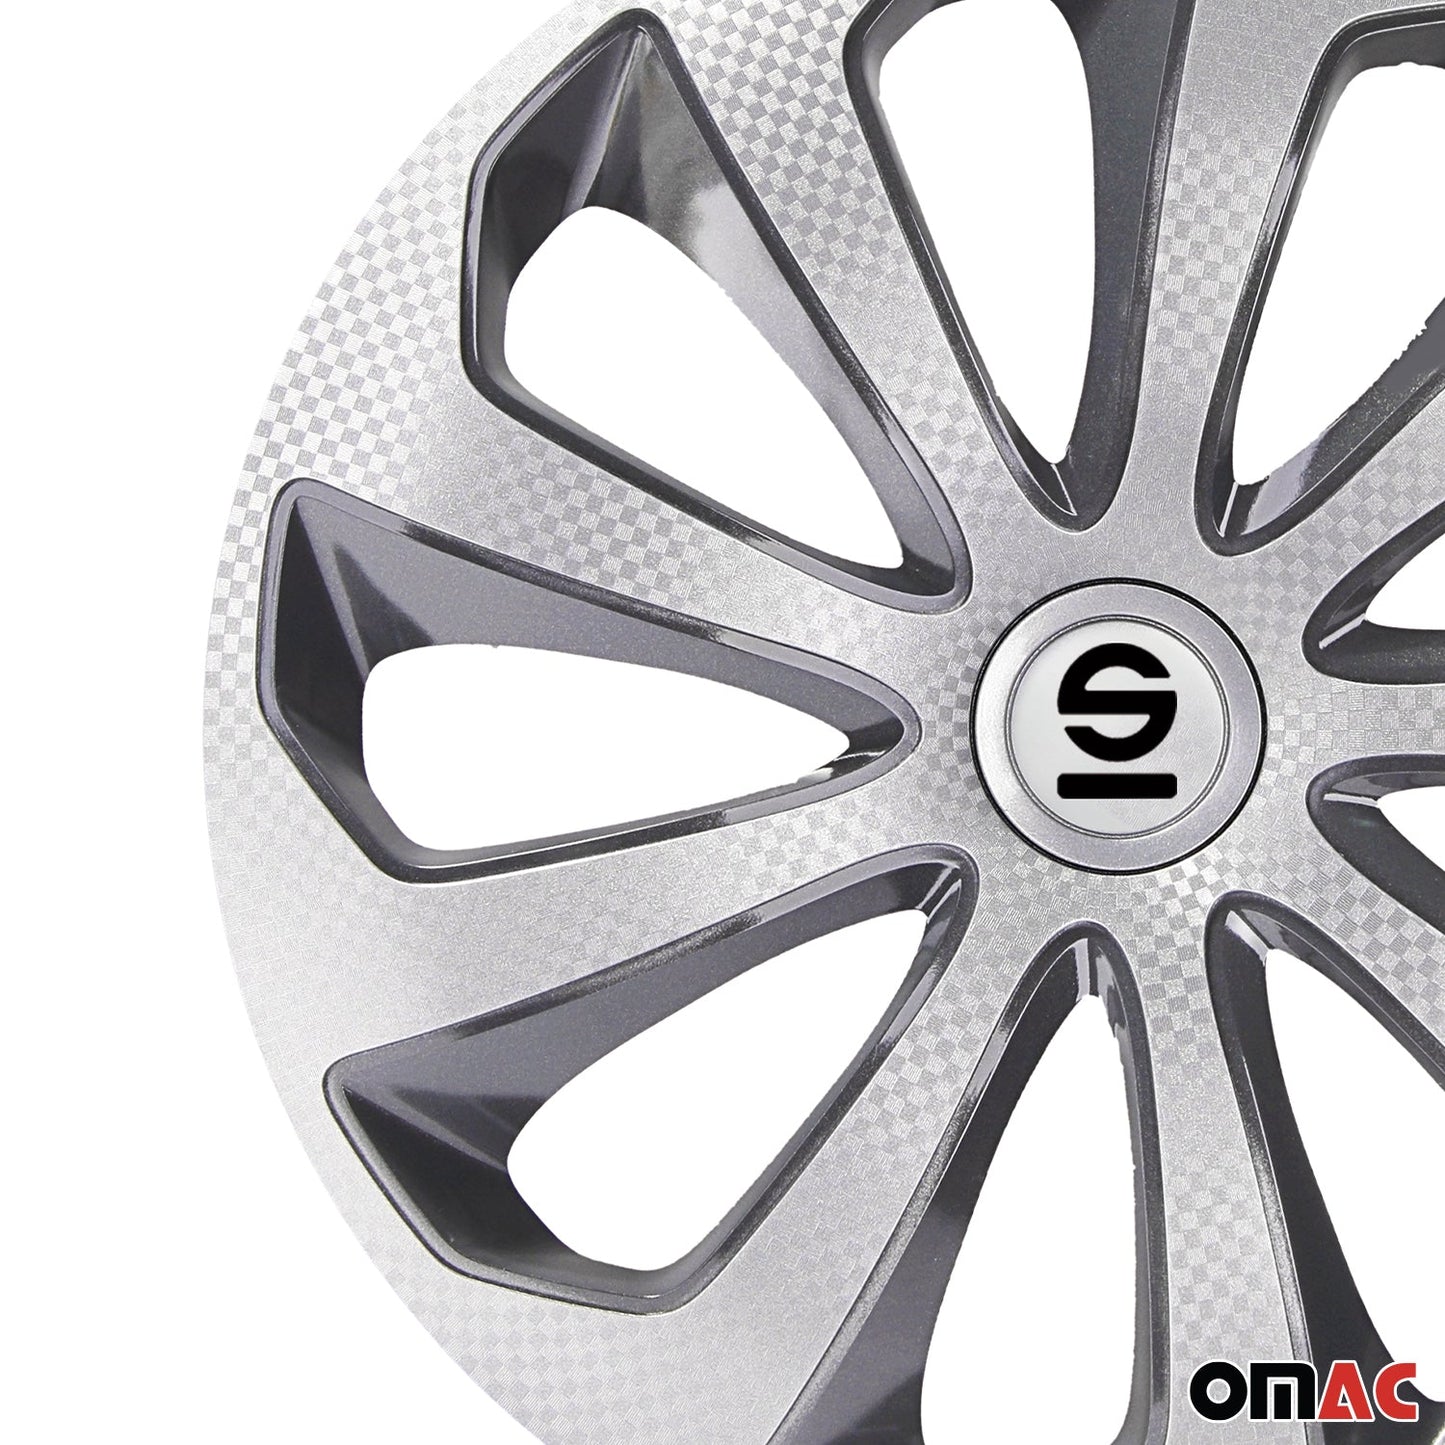 OMAC 14" Sparco Sicilia Wheel Covers Hubcaps Silver Carbon Gray 4 Pcs 96SPC1475SVGRC